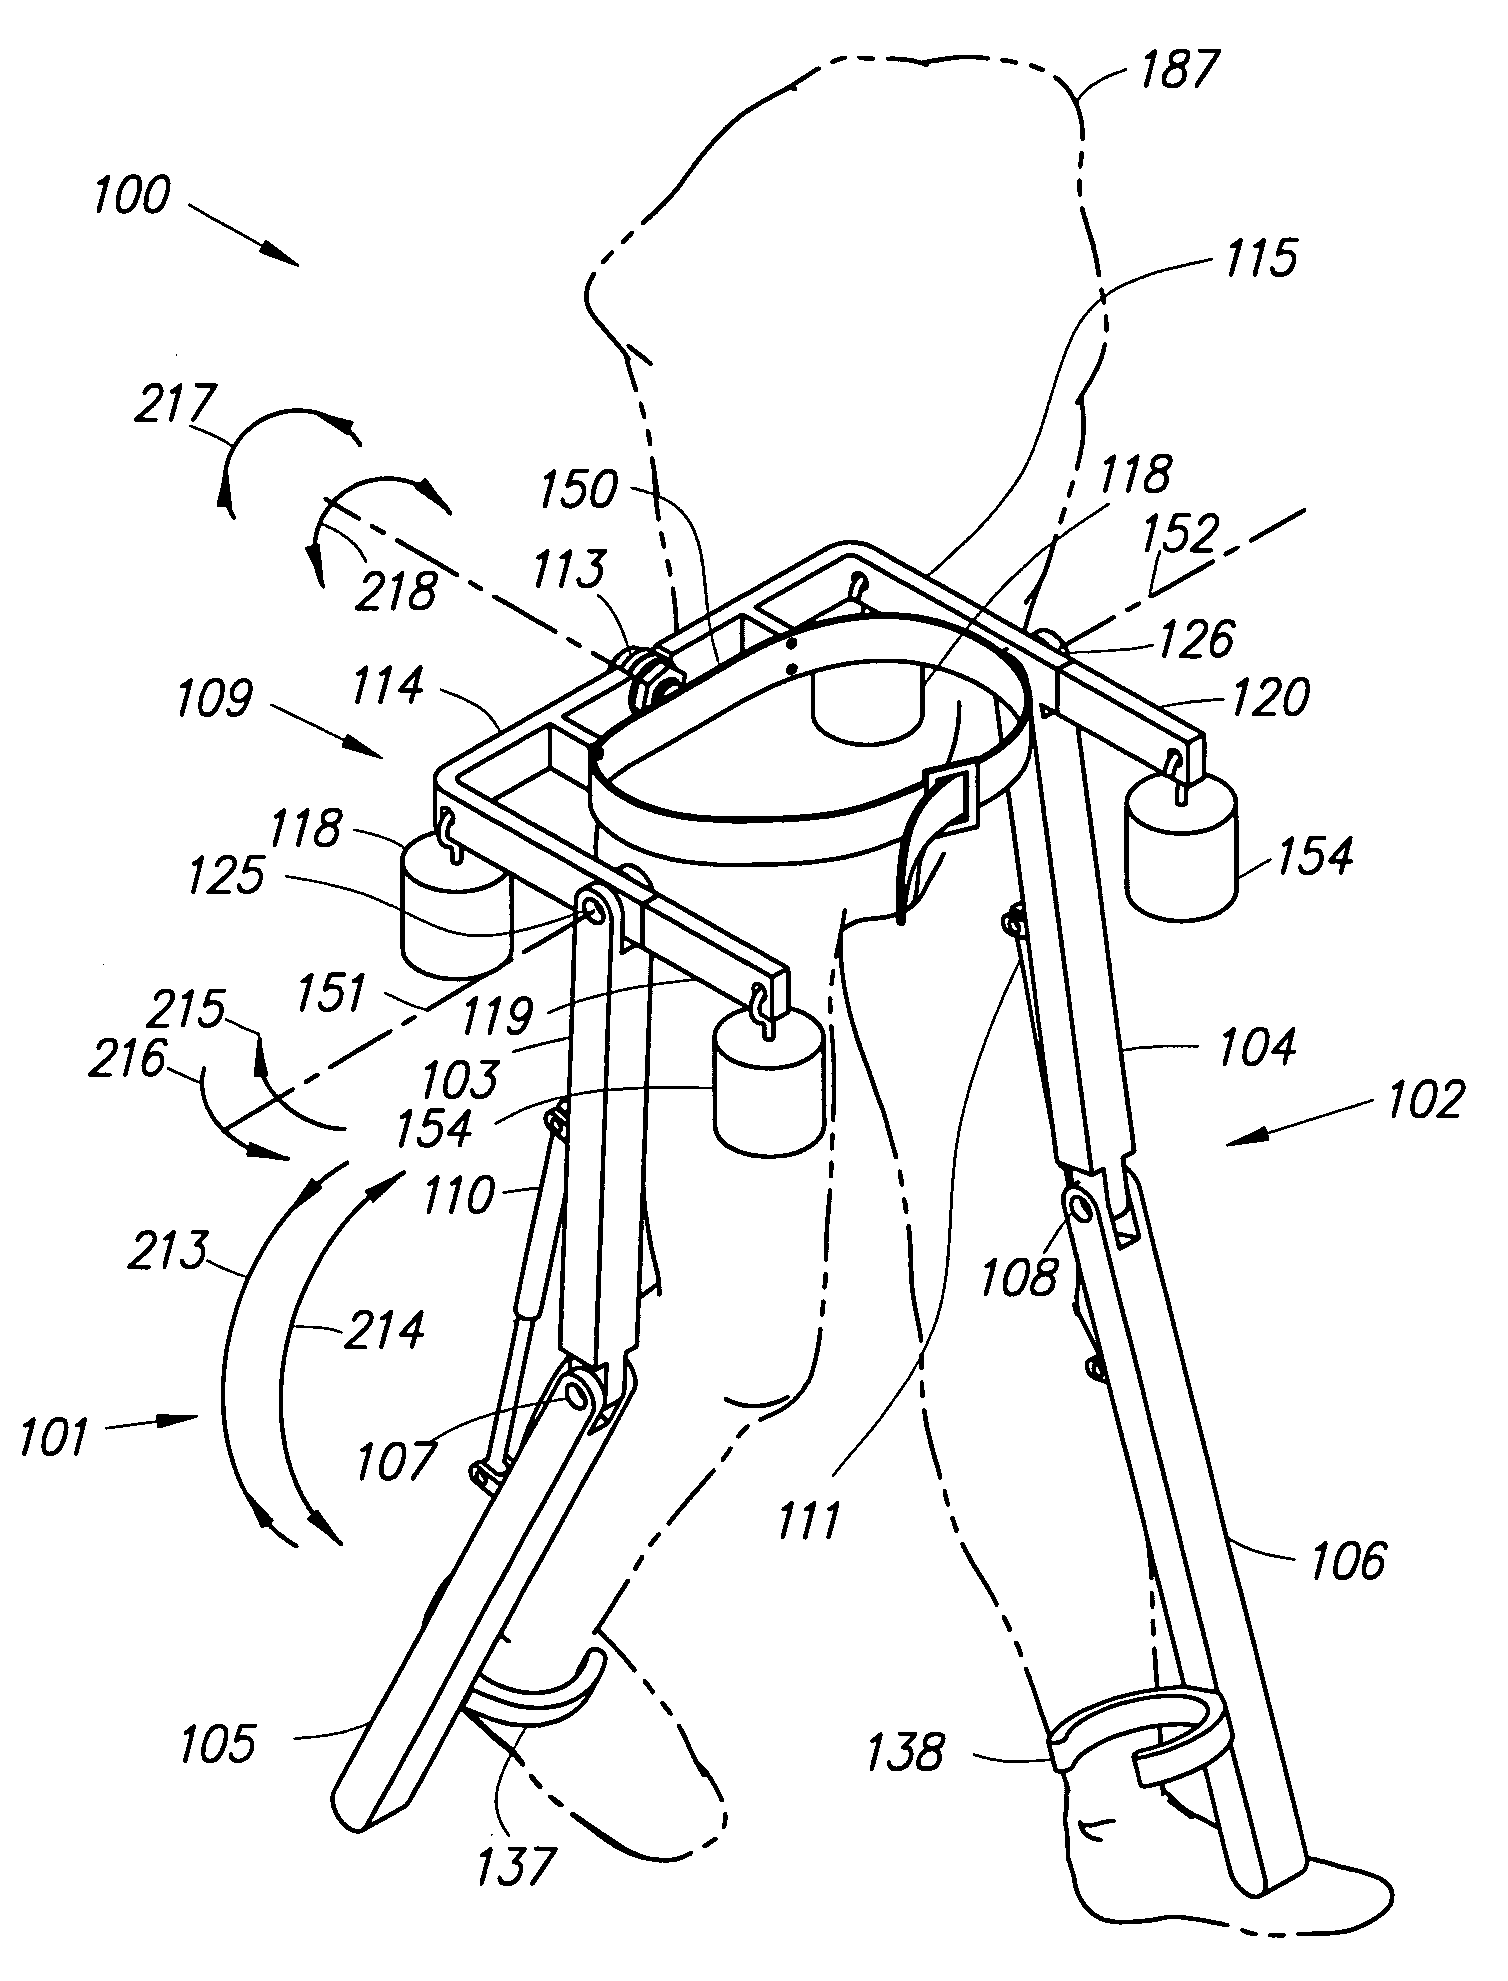 Lower extremity exoskeleton